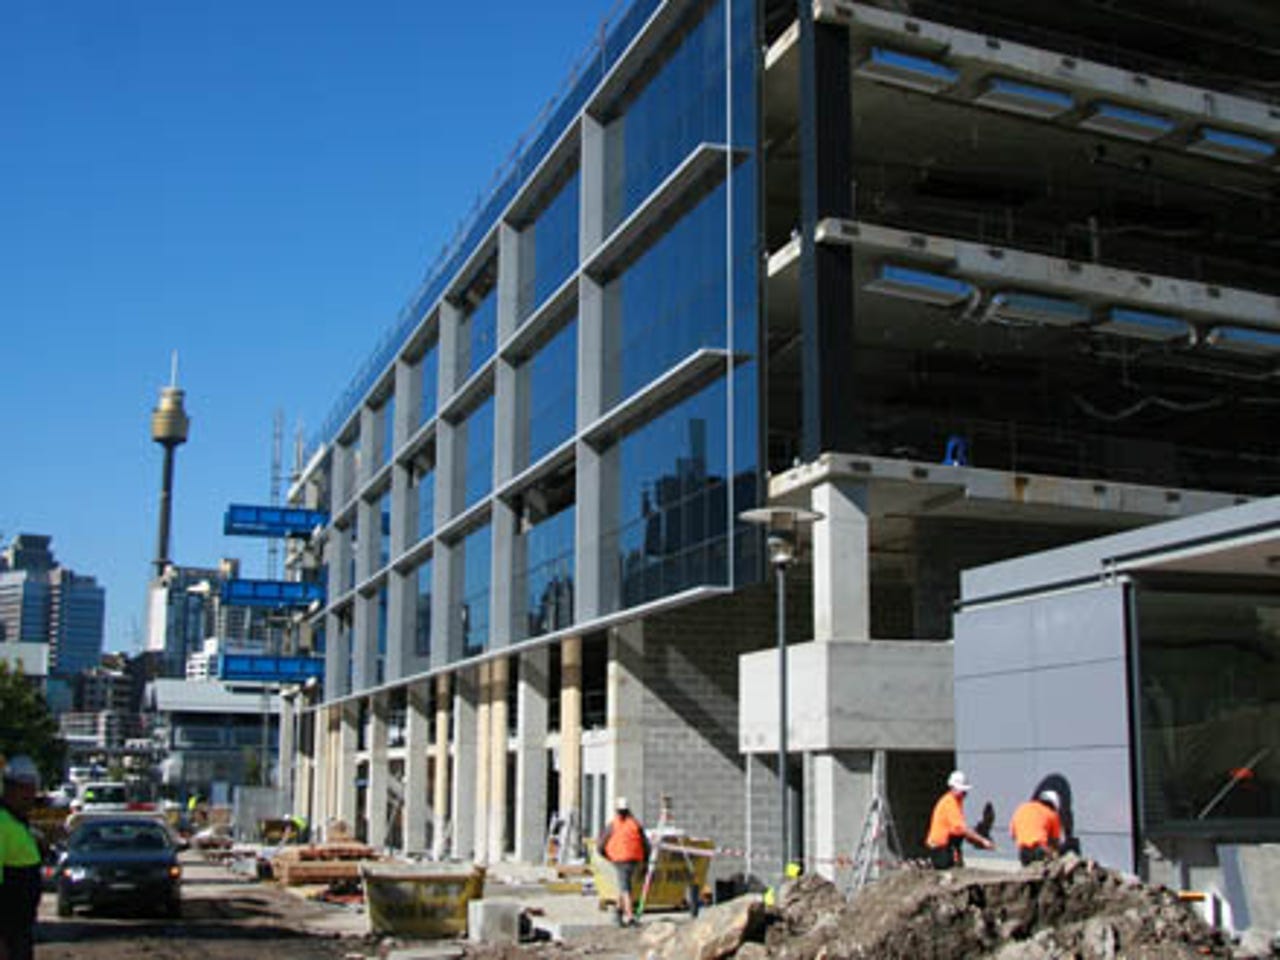 photos-sydney-googleplex-under-construction4.jpg